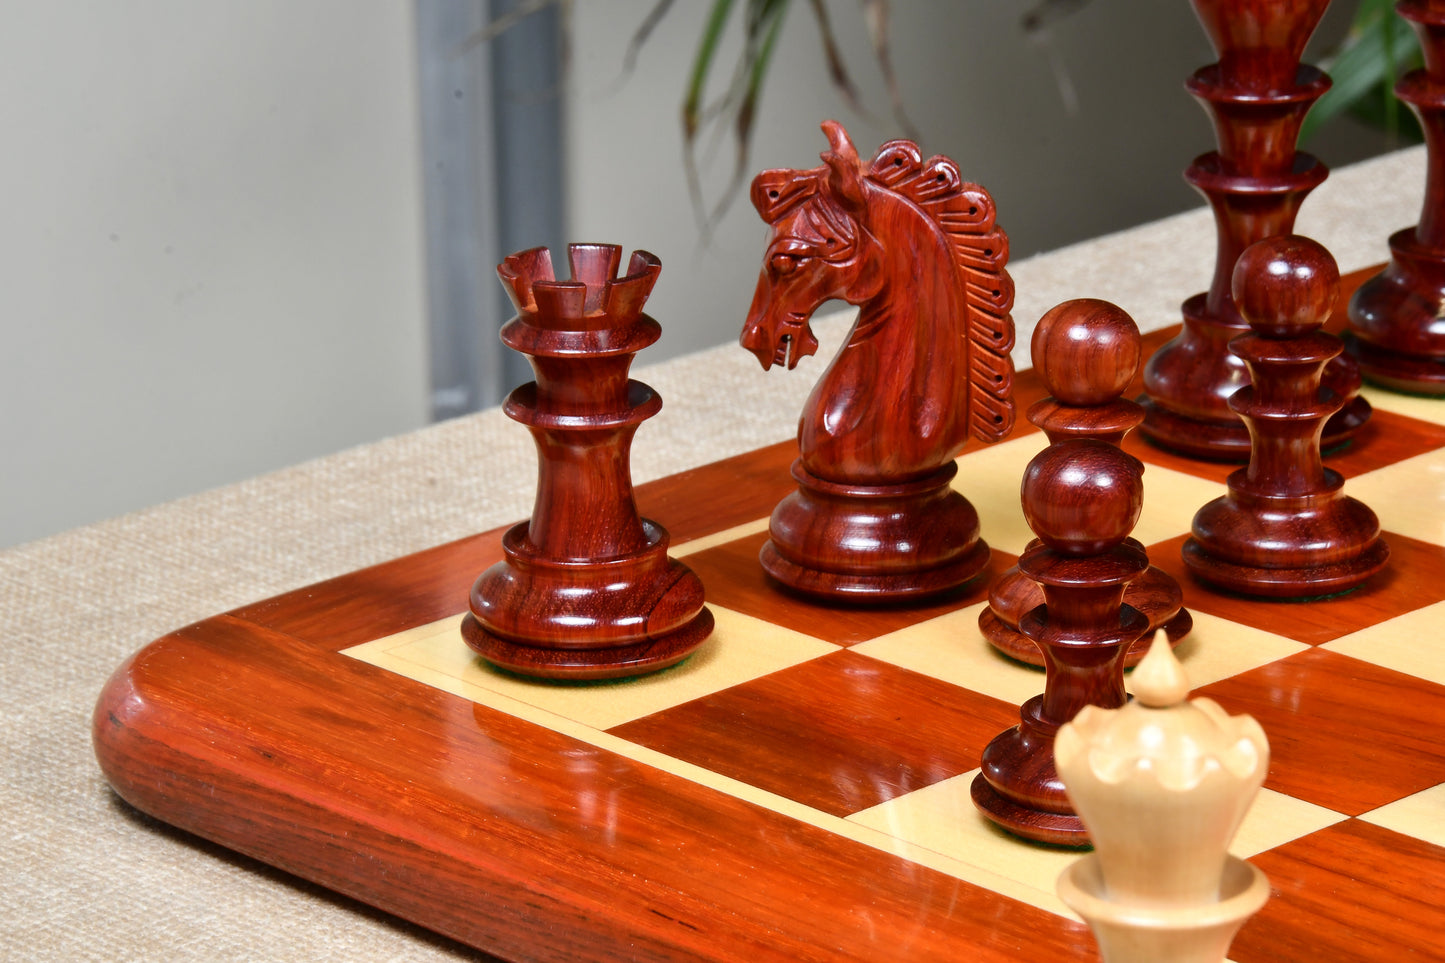 The Hurricane Series Staunton Luxury Chess Pieces Bud Rose & Box Wood - 4.7" King